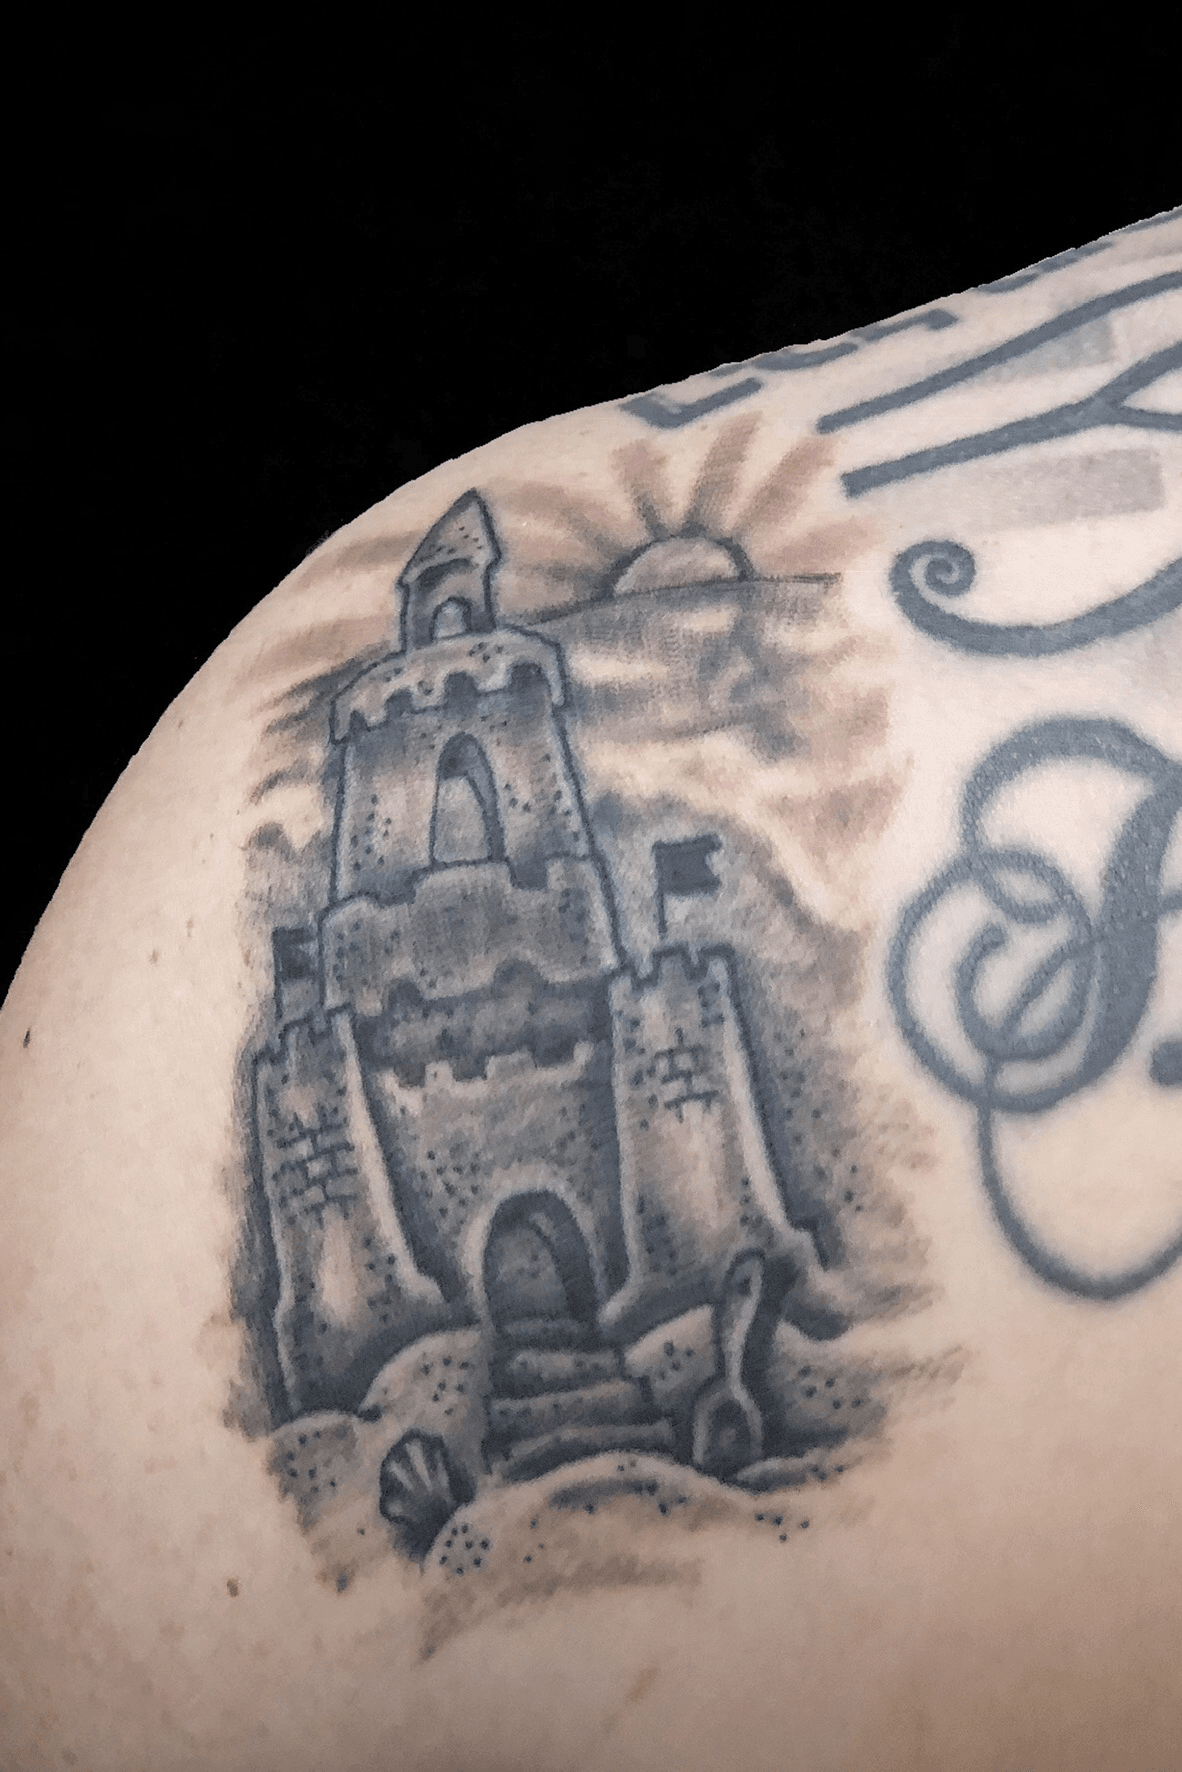 Spooky Magic Palace first tattoo by Juan Estrada at Be Good Tattoo Co  Hamilton ON Canada  rtattoos